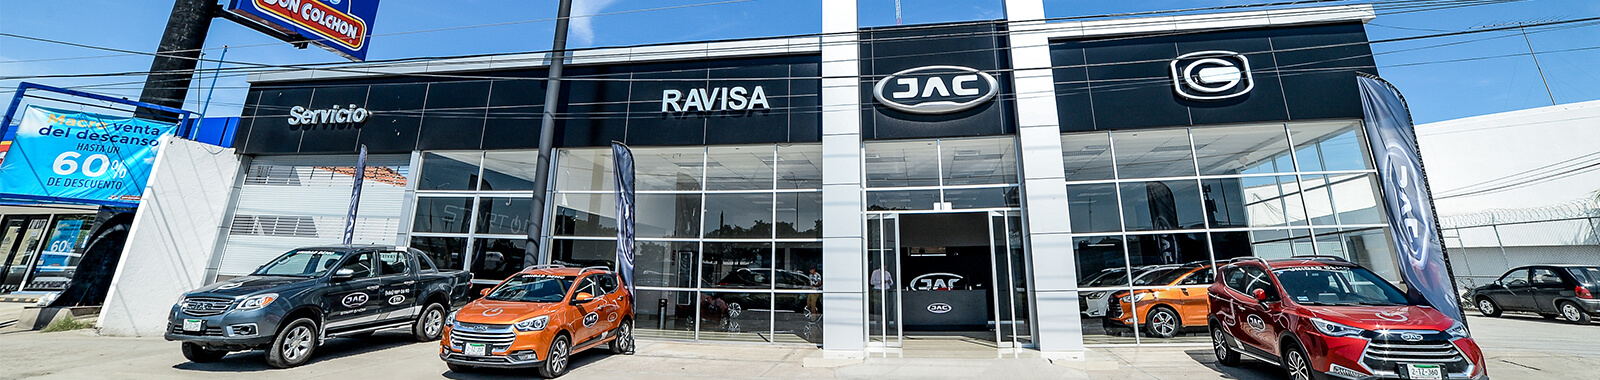 JAC Store San Luis